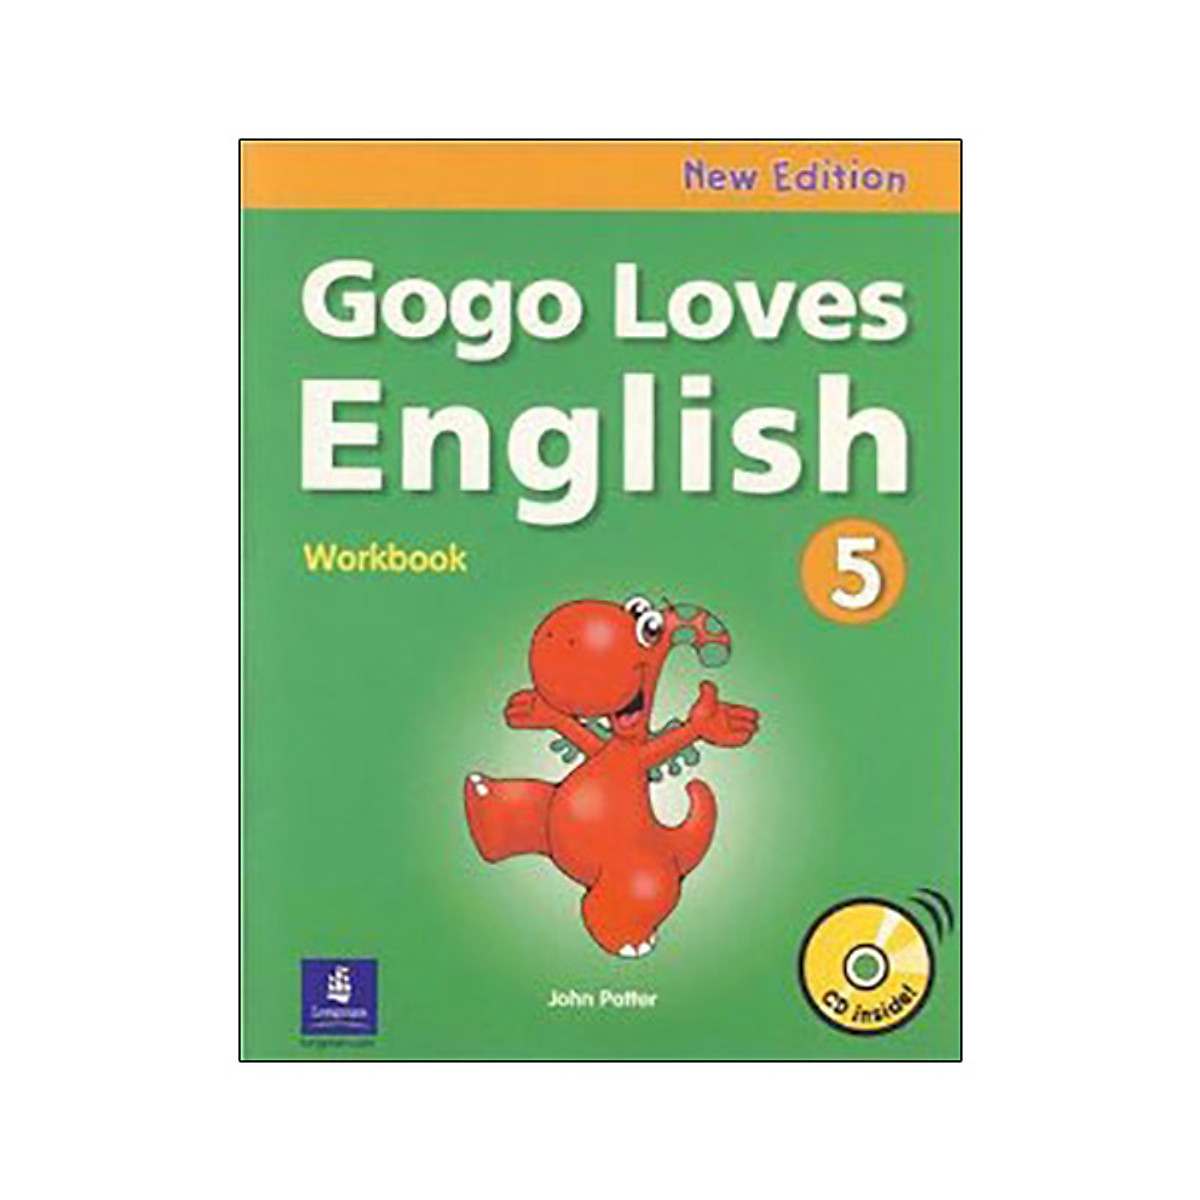 Gogo Loves English N/E W/B 5